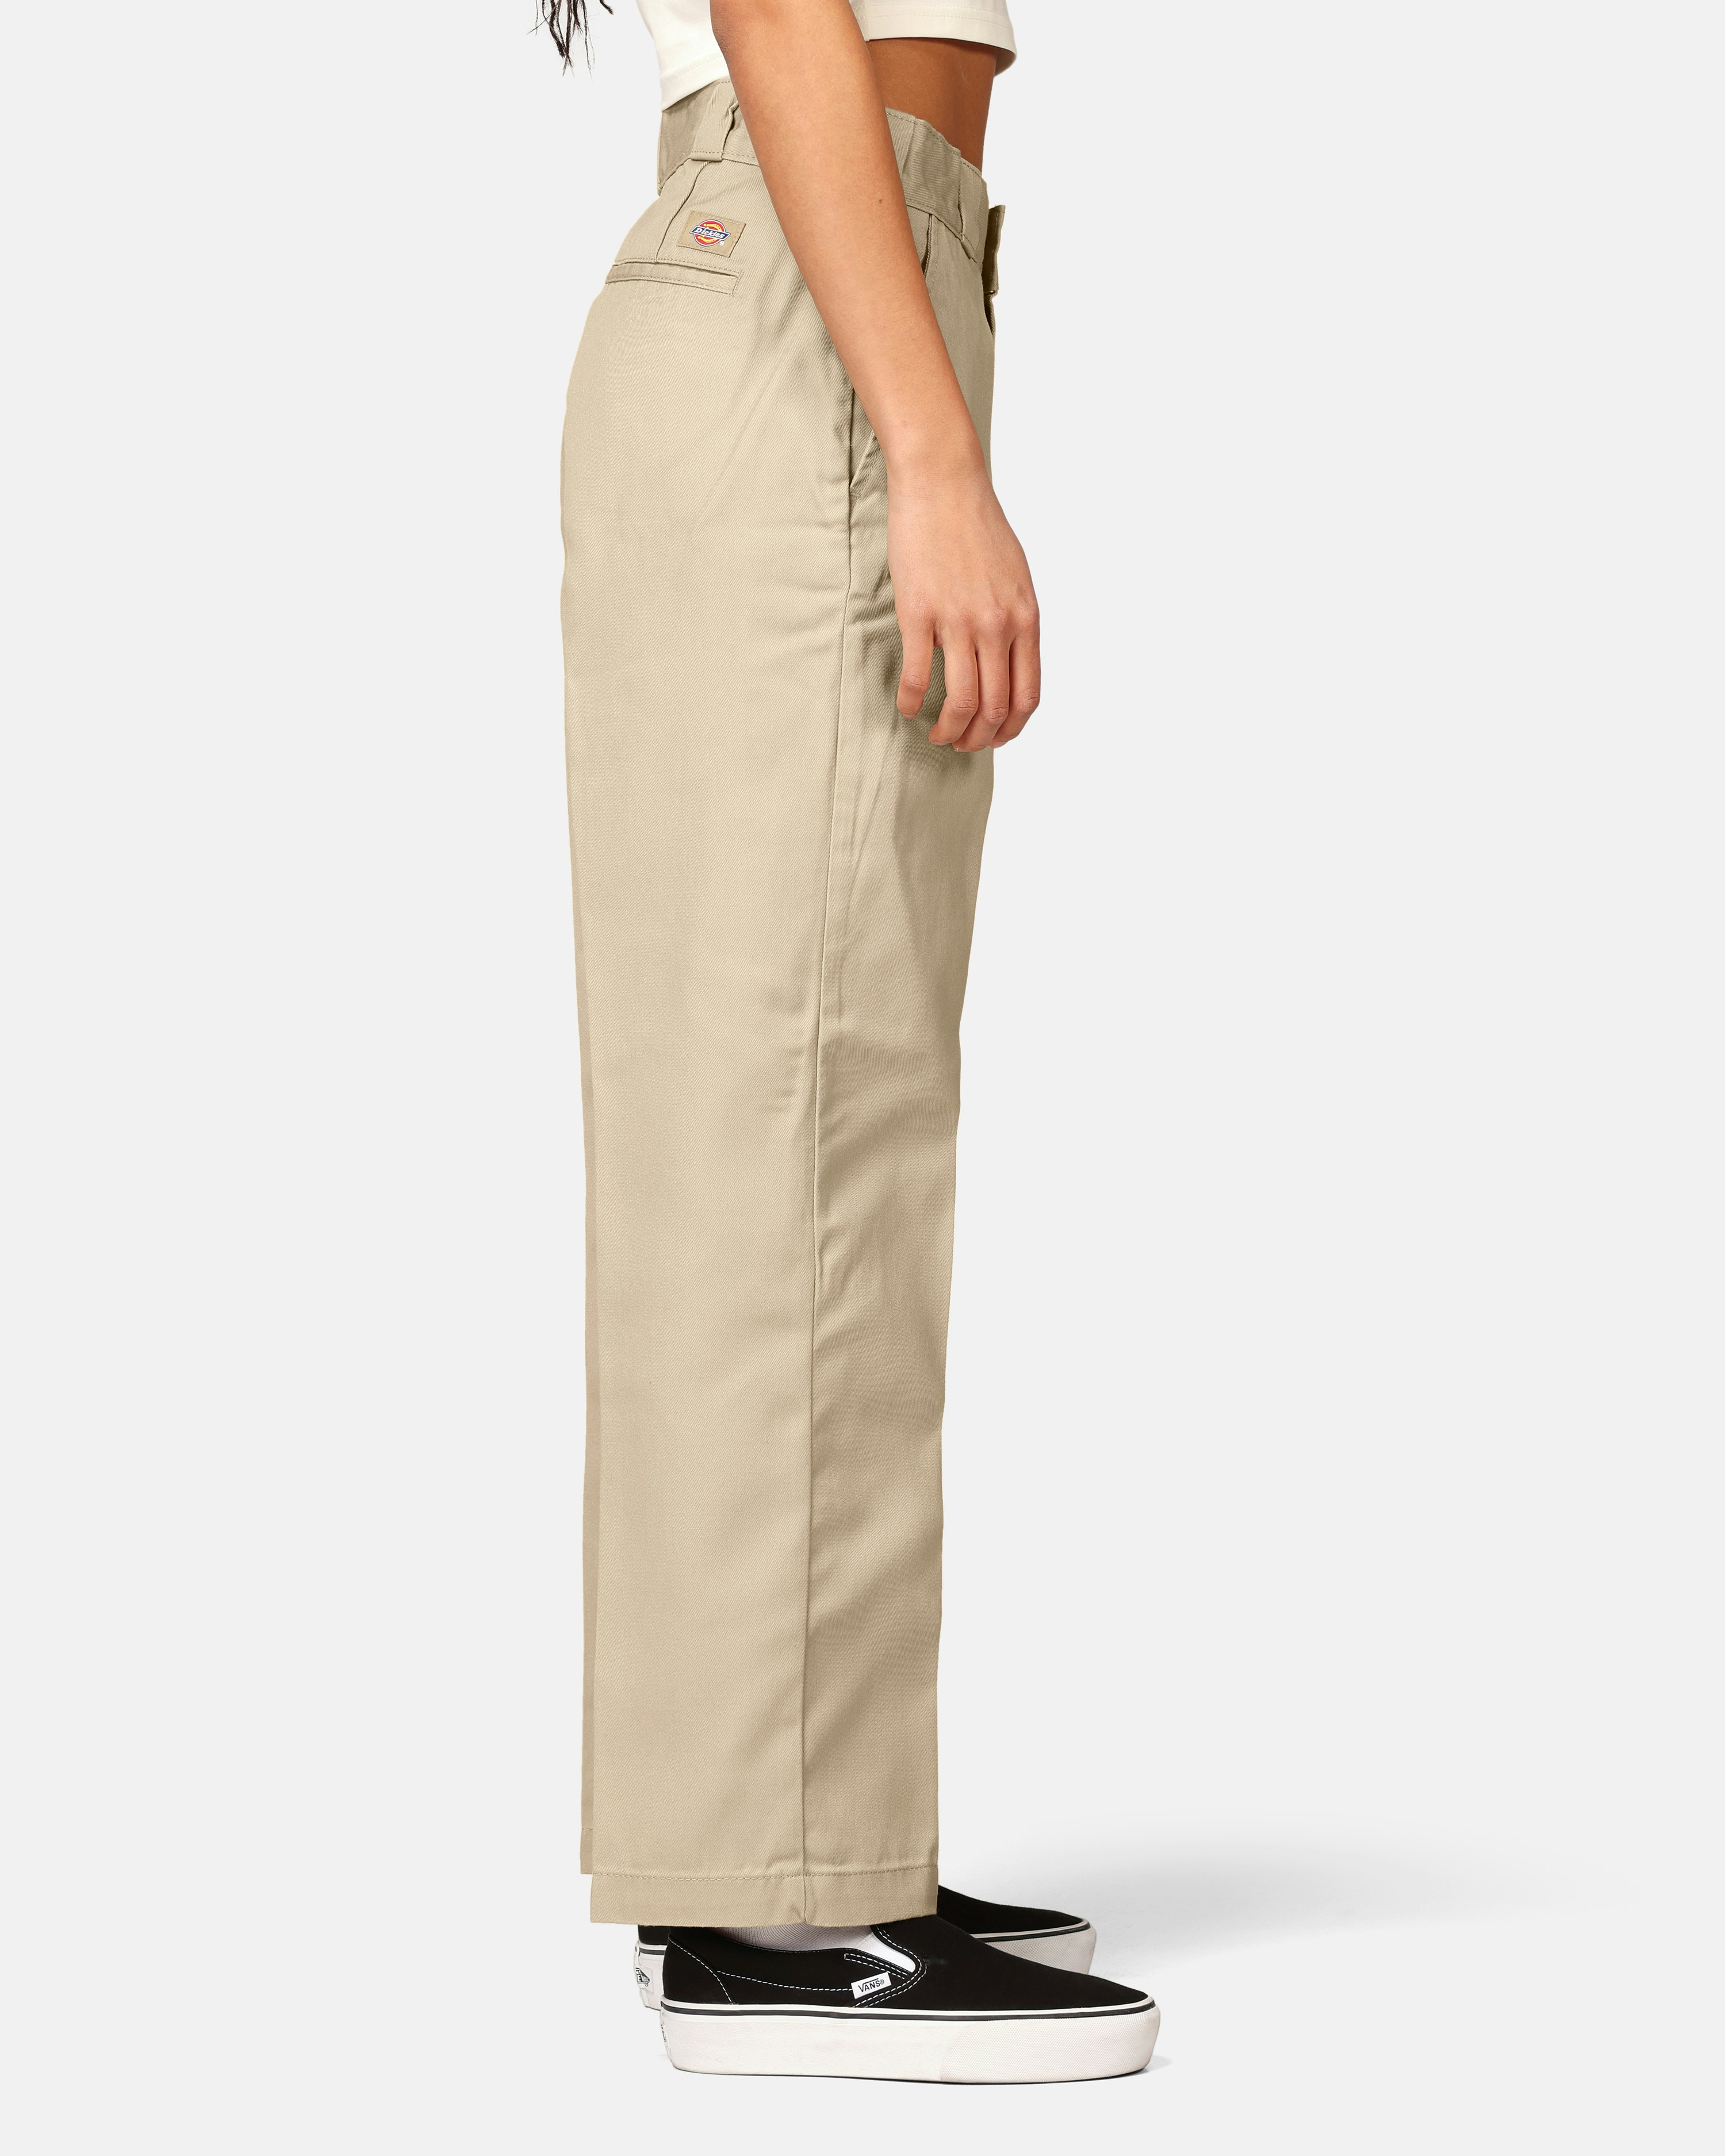 Shop Dickies Elizaville Recycled Pants women (khaki) online